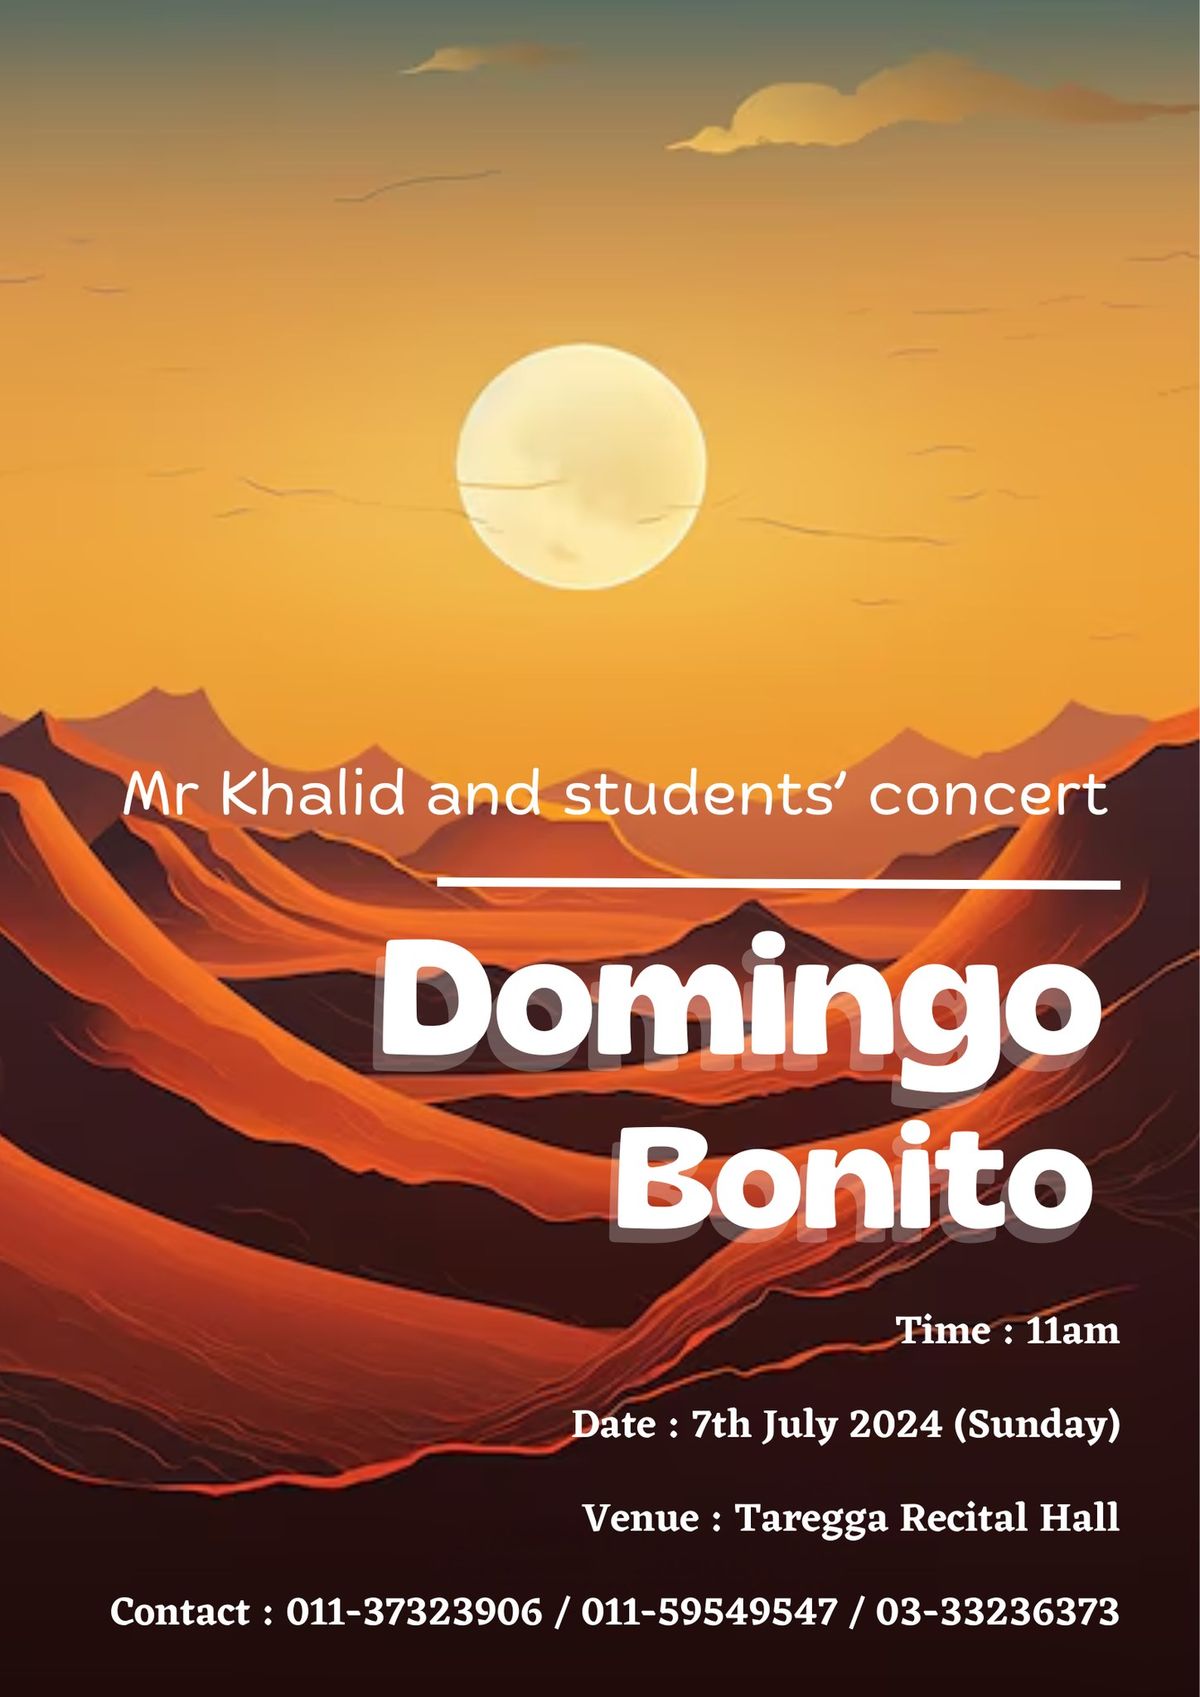 Mr Khalid and students' concert - Domingo Bonito